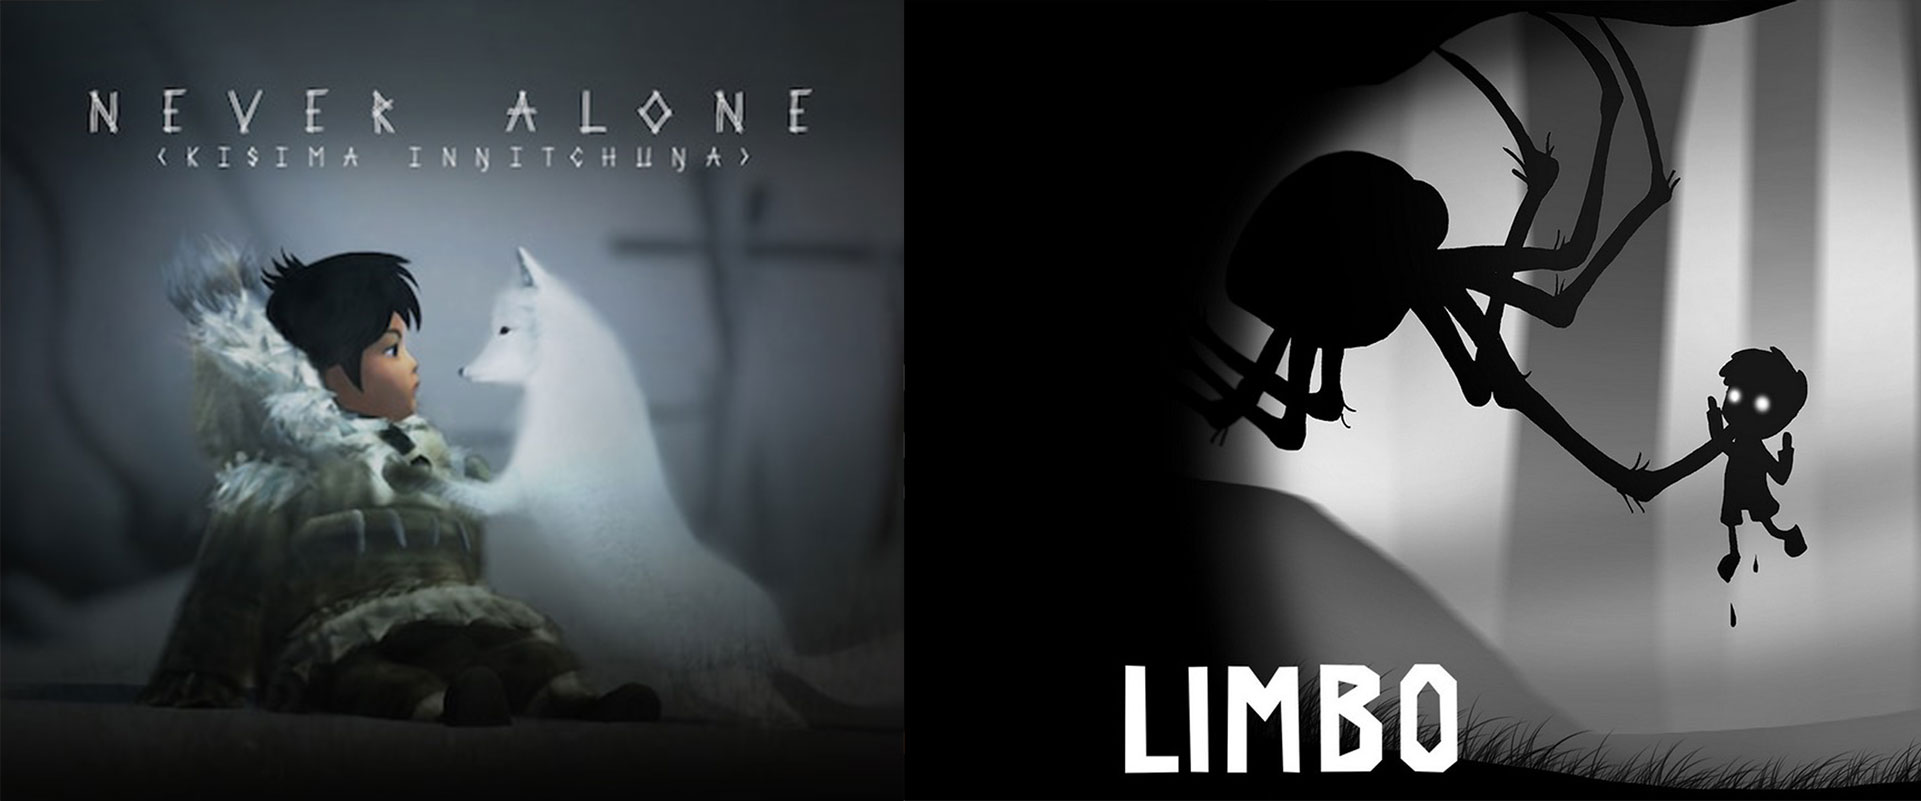 Limbo - Never Alone header